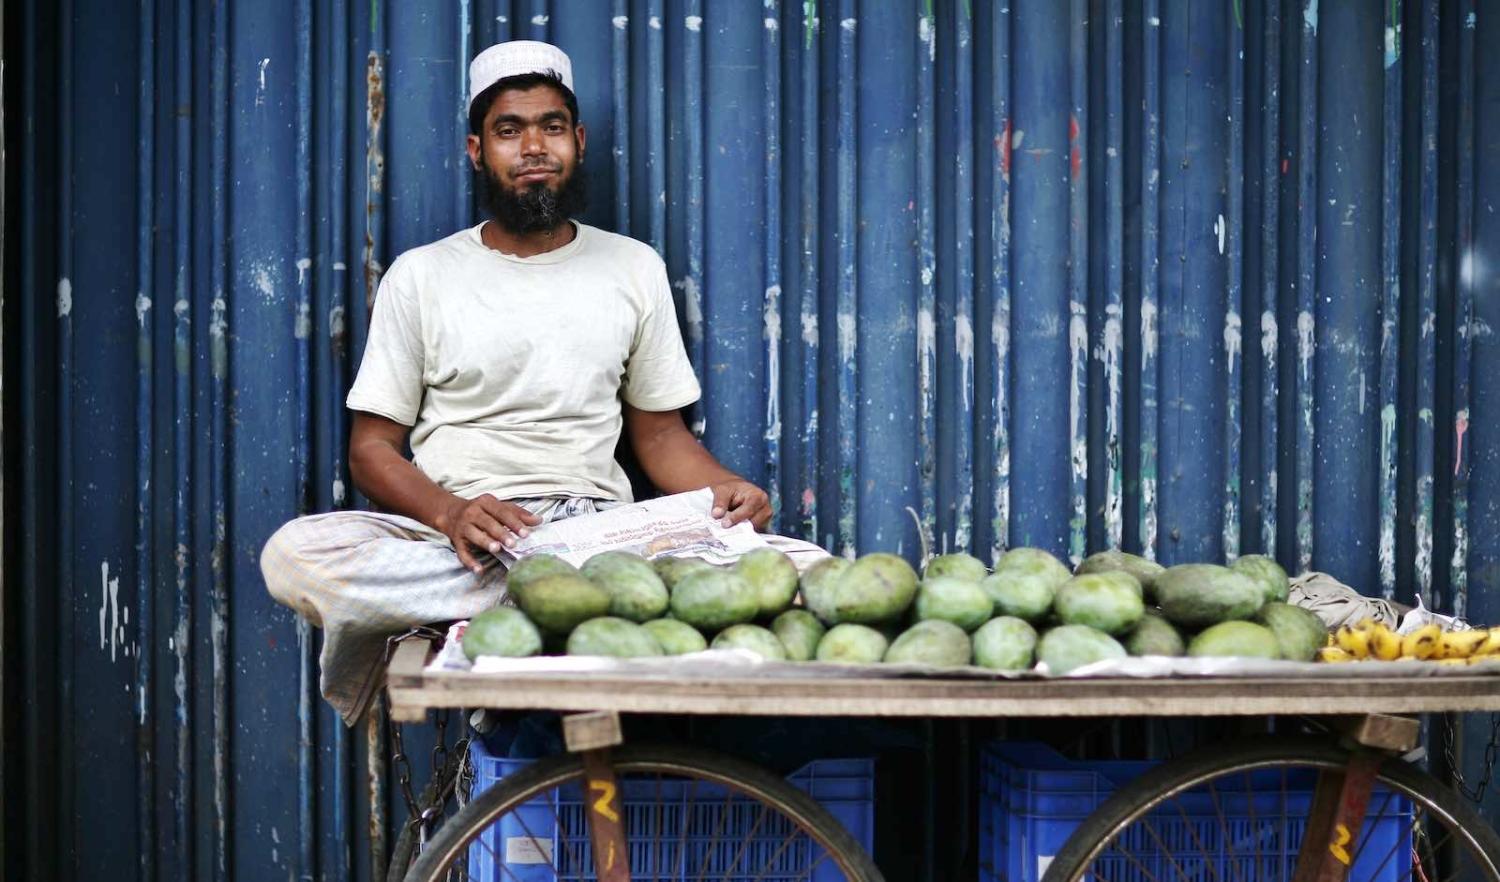 A mango seller in Chittagong, Bangladesh (Nayeem Kalam via Getty Images)